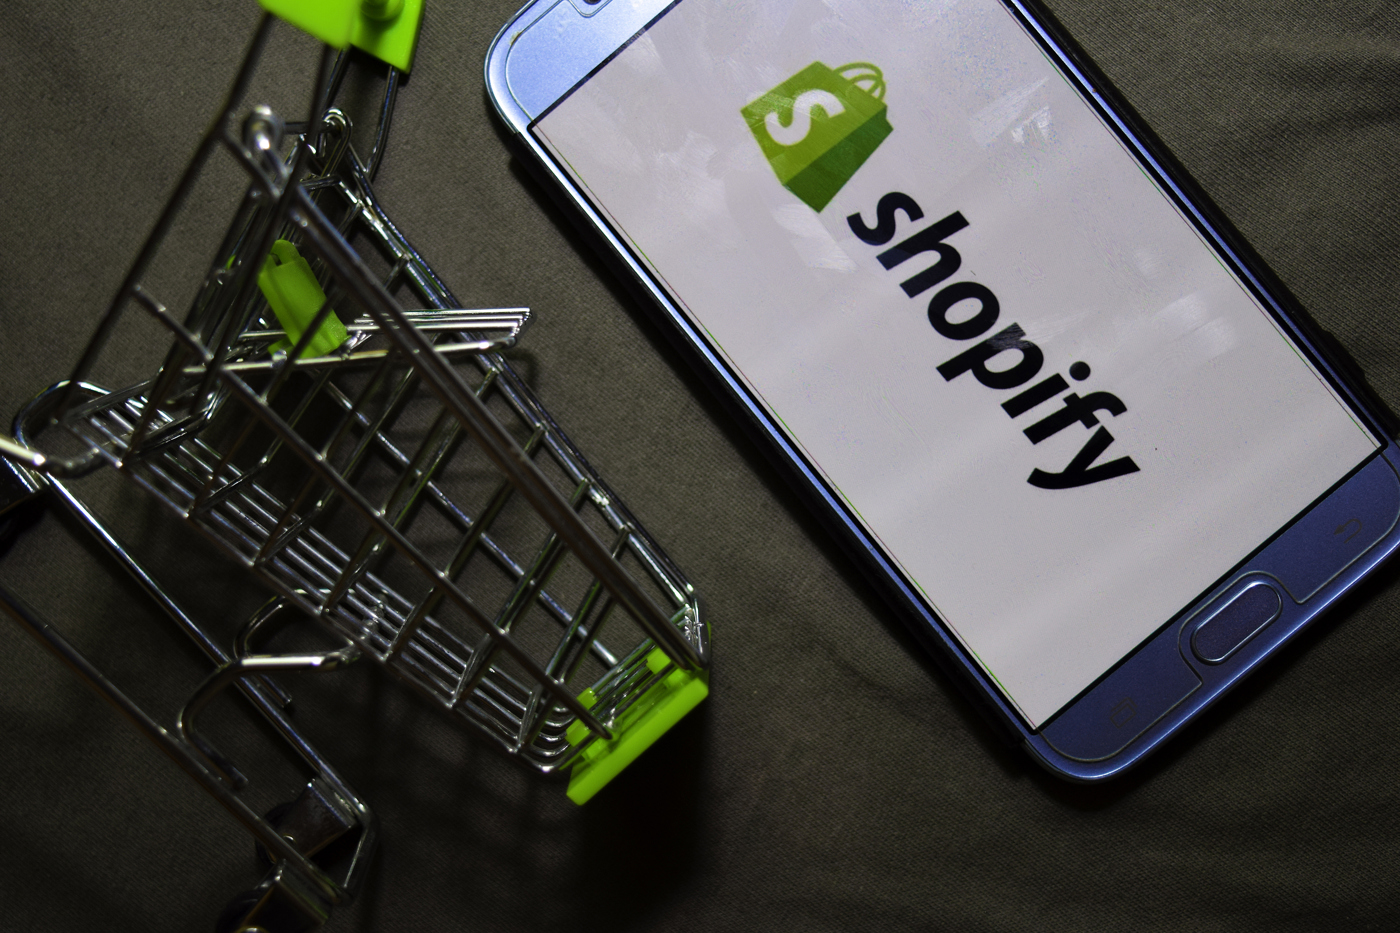 Shopify stock, SHOP stock, ecommerce stocks